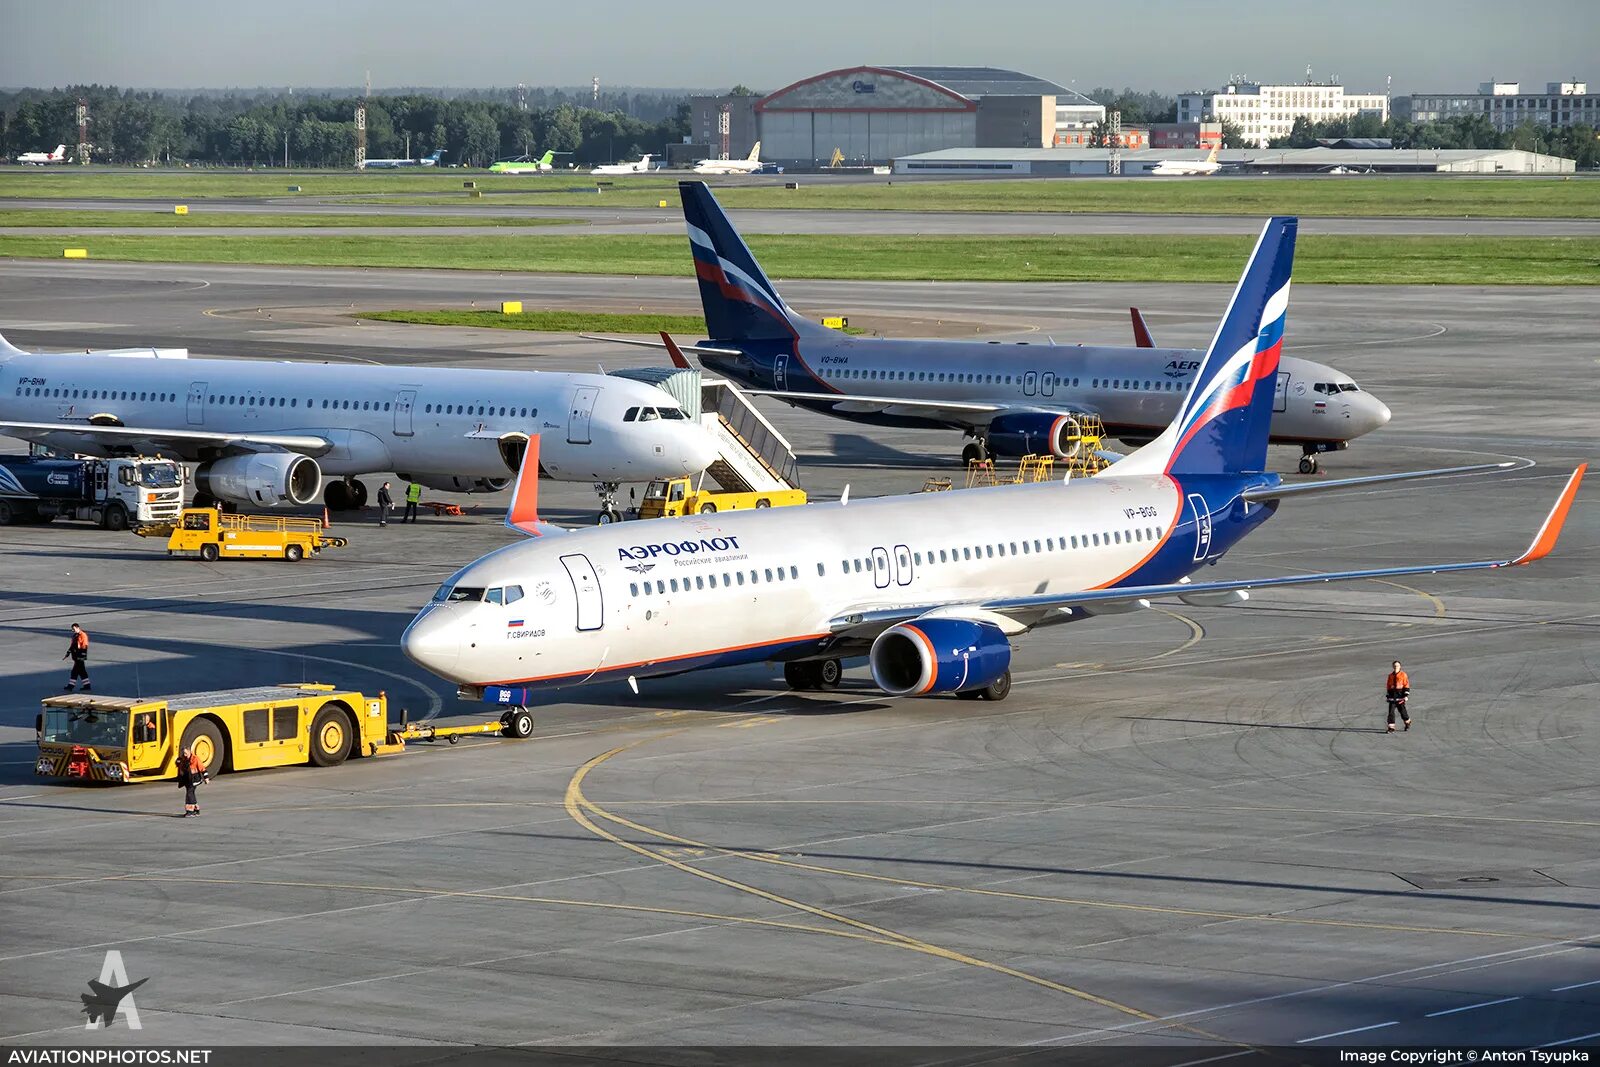 Boeing 737 Aeroflot. Boeing 737 Аэрофлот. Boeing 737-8lj Аэрофлот. Боинг 787 Аэрофлот. Aeroflot 737